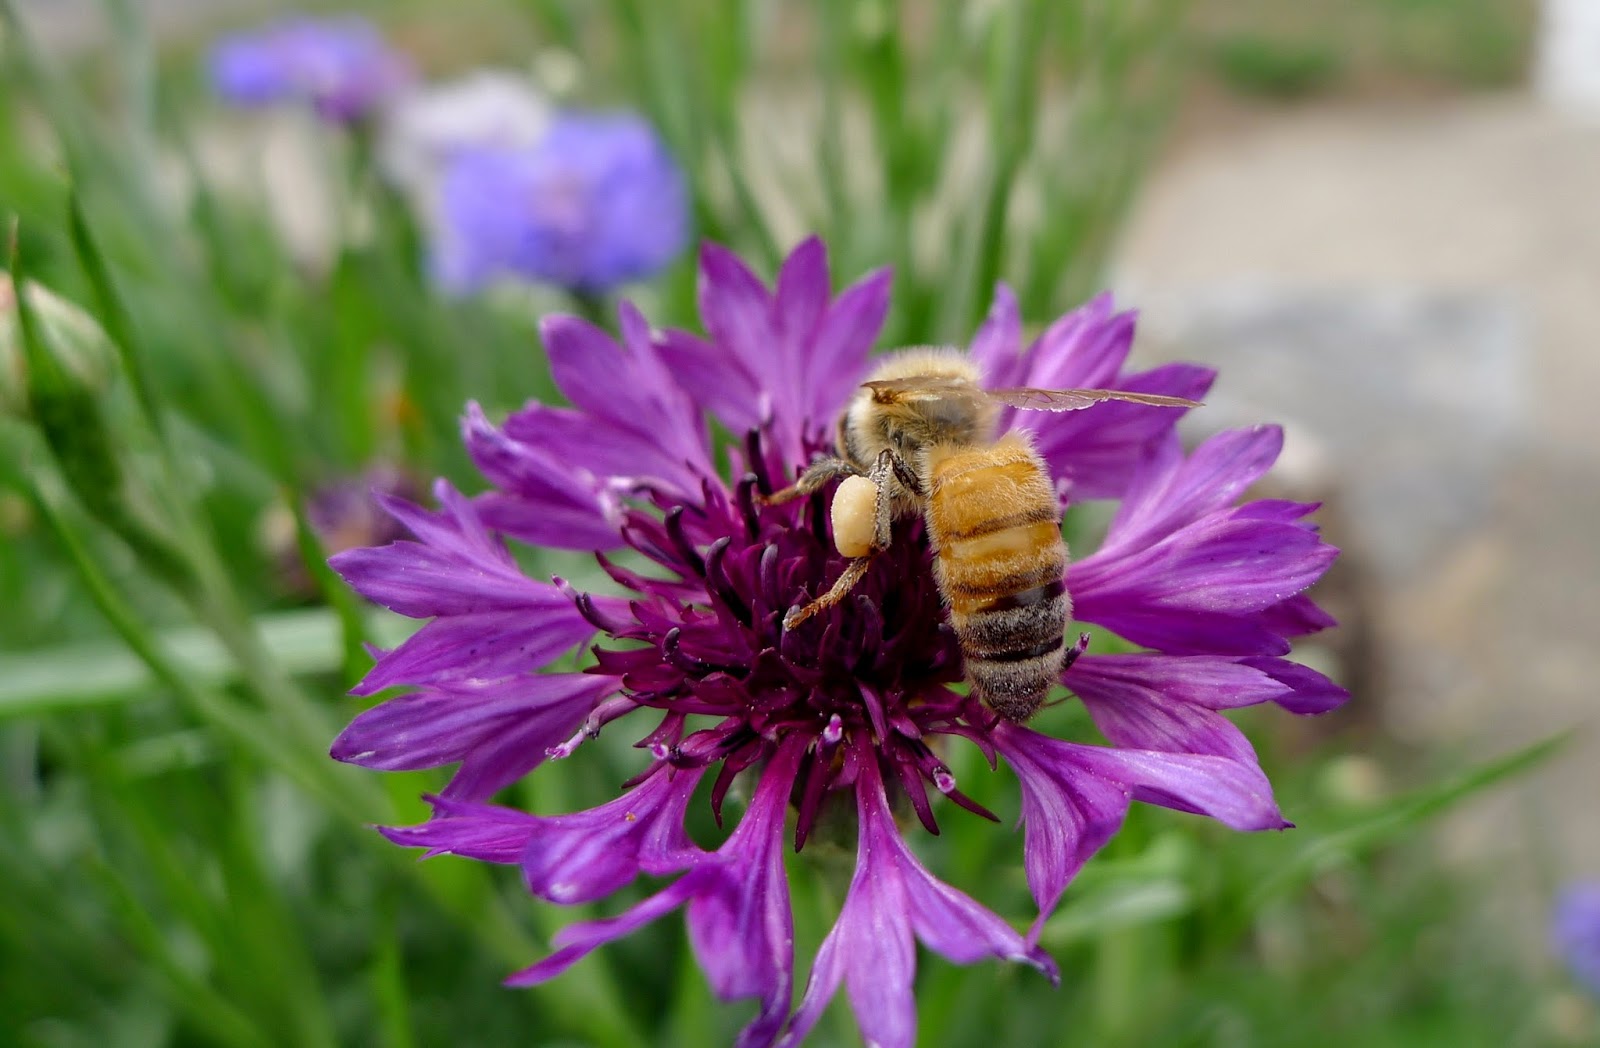 Honey Bee on Batchelor's Button, Pollinators, Urban Farming